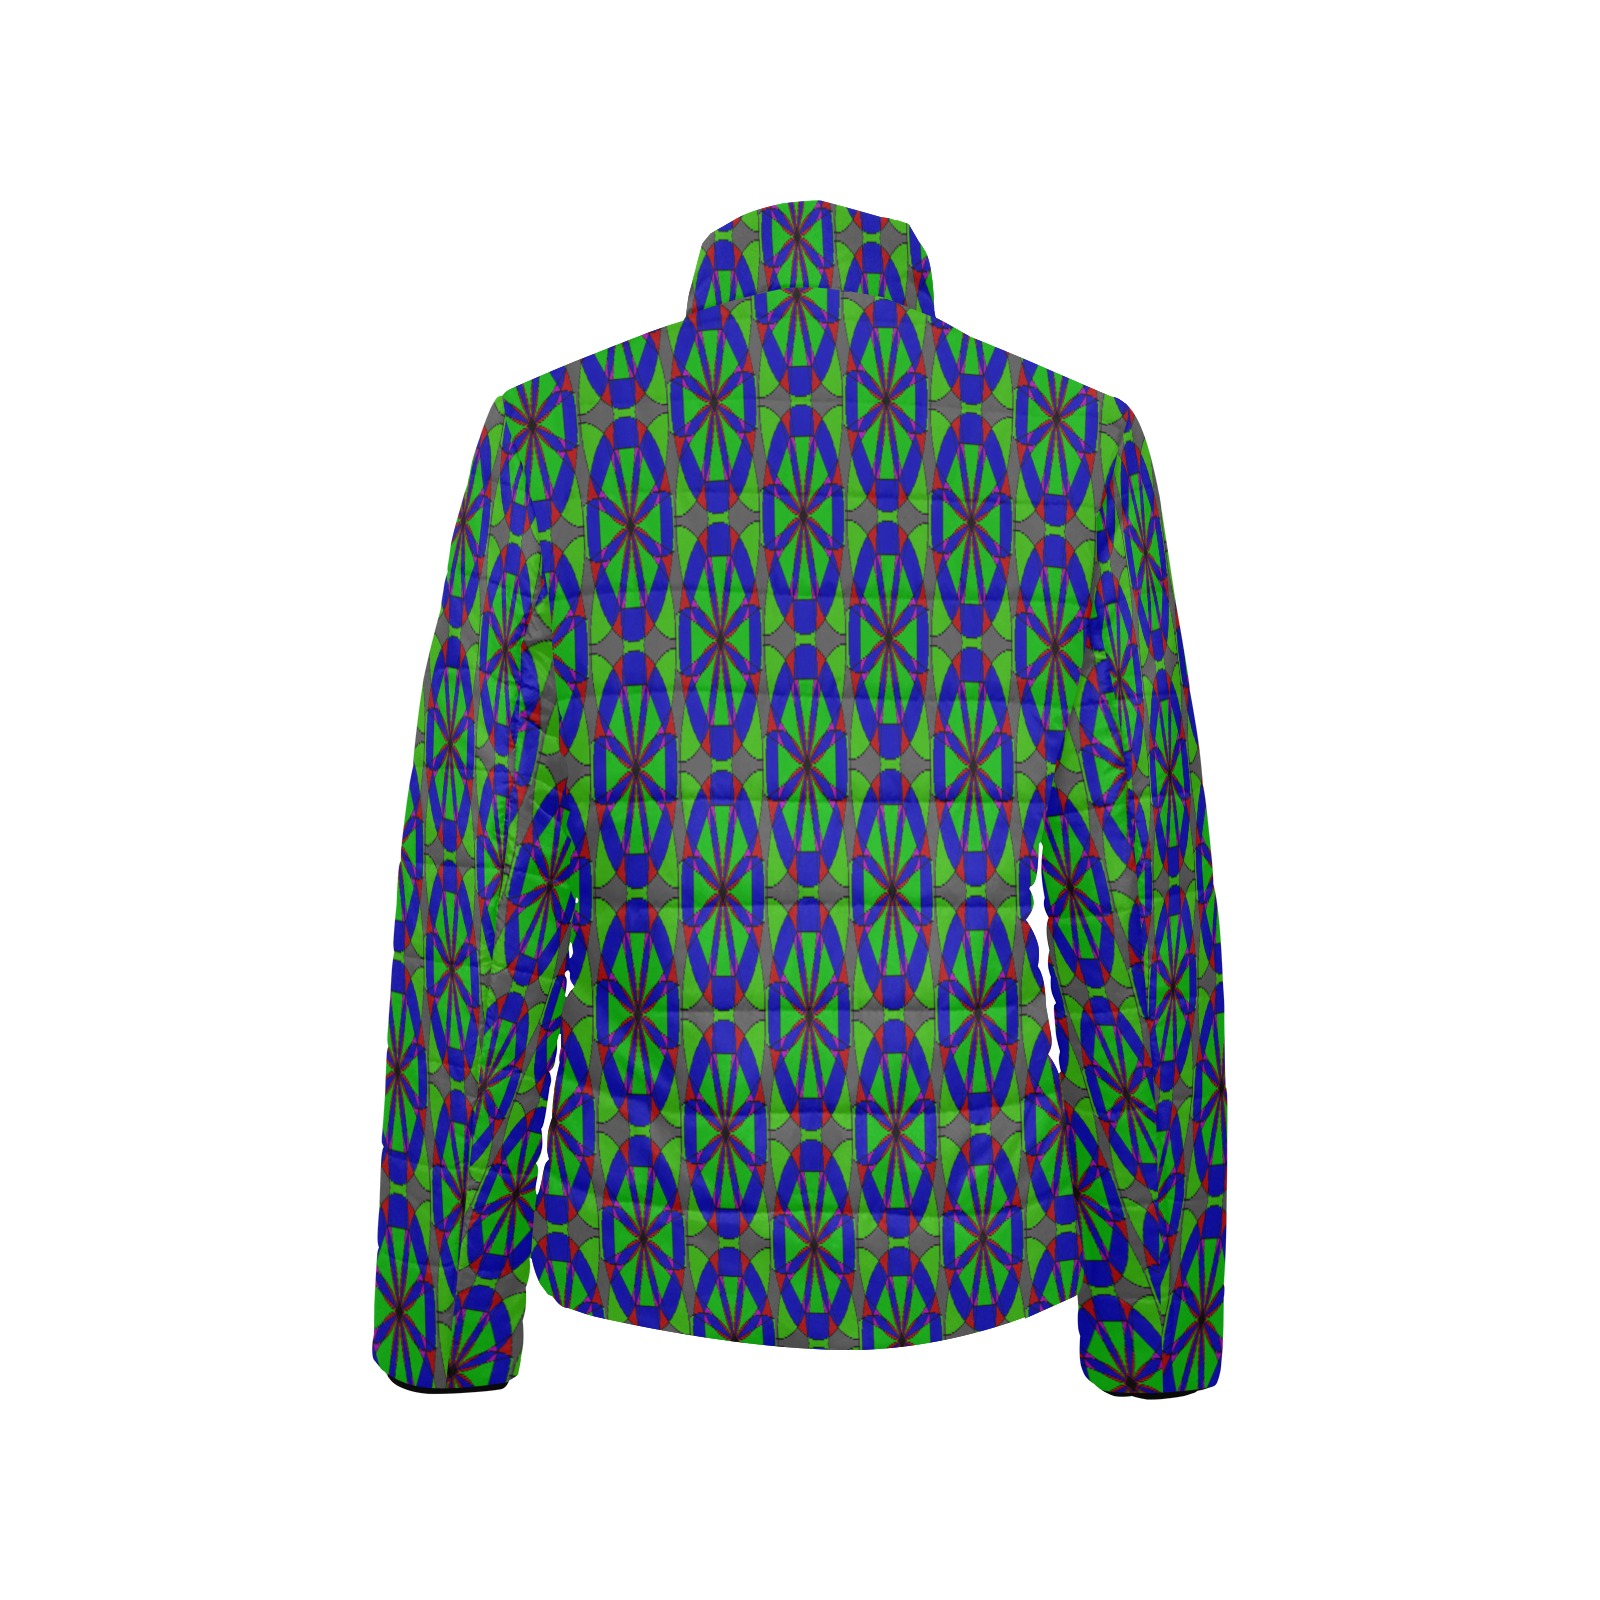 digitaldesign Women's Stand Collar Padded Jacket (Model H41)